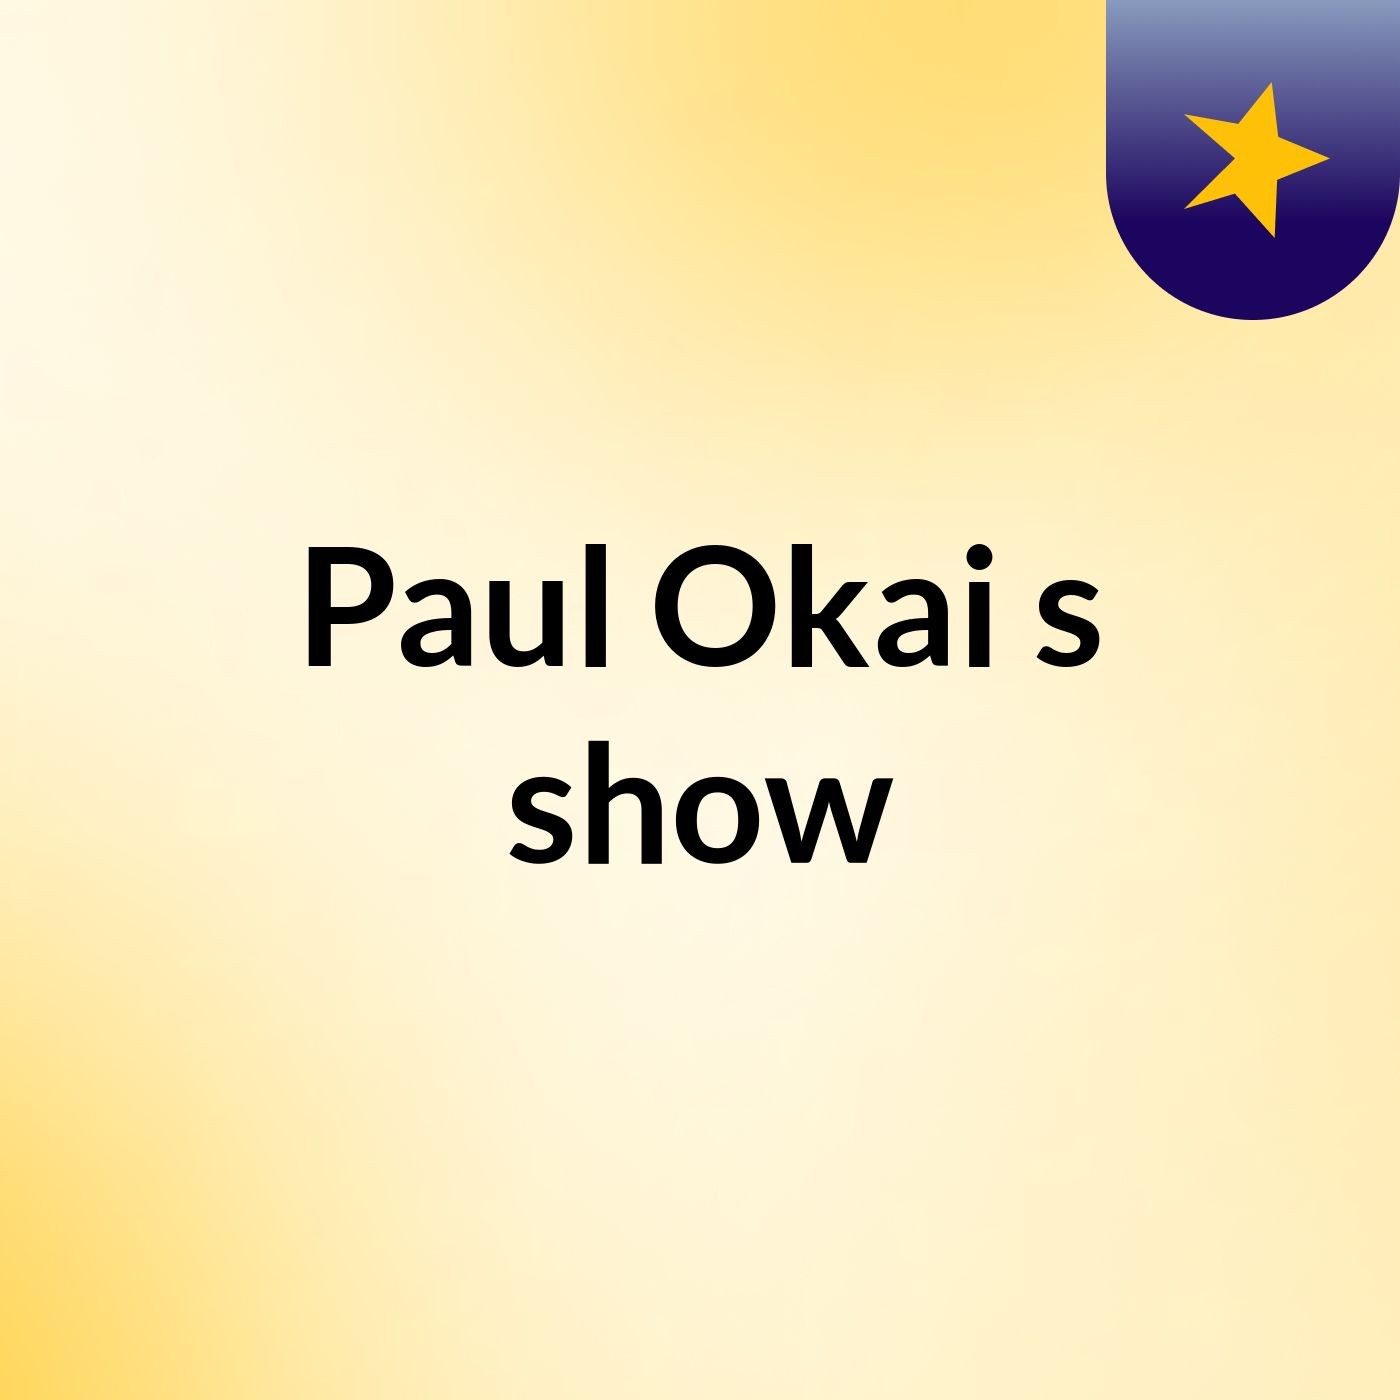 Paul Okai's show